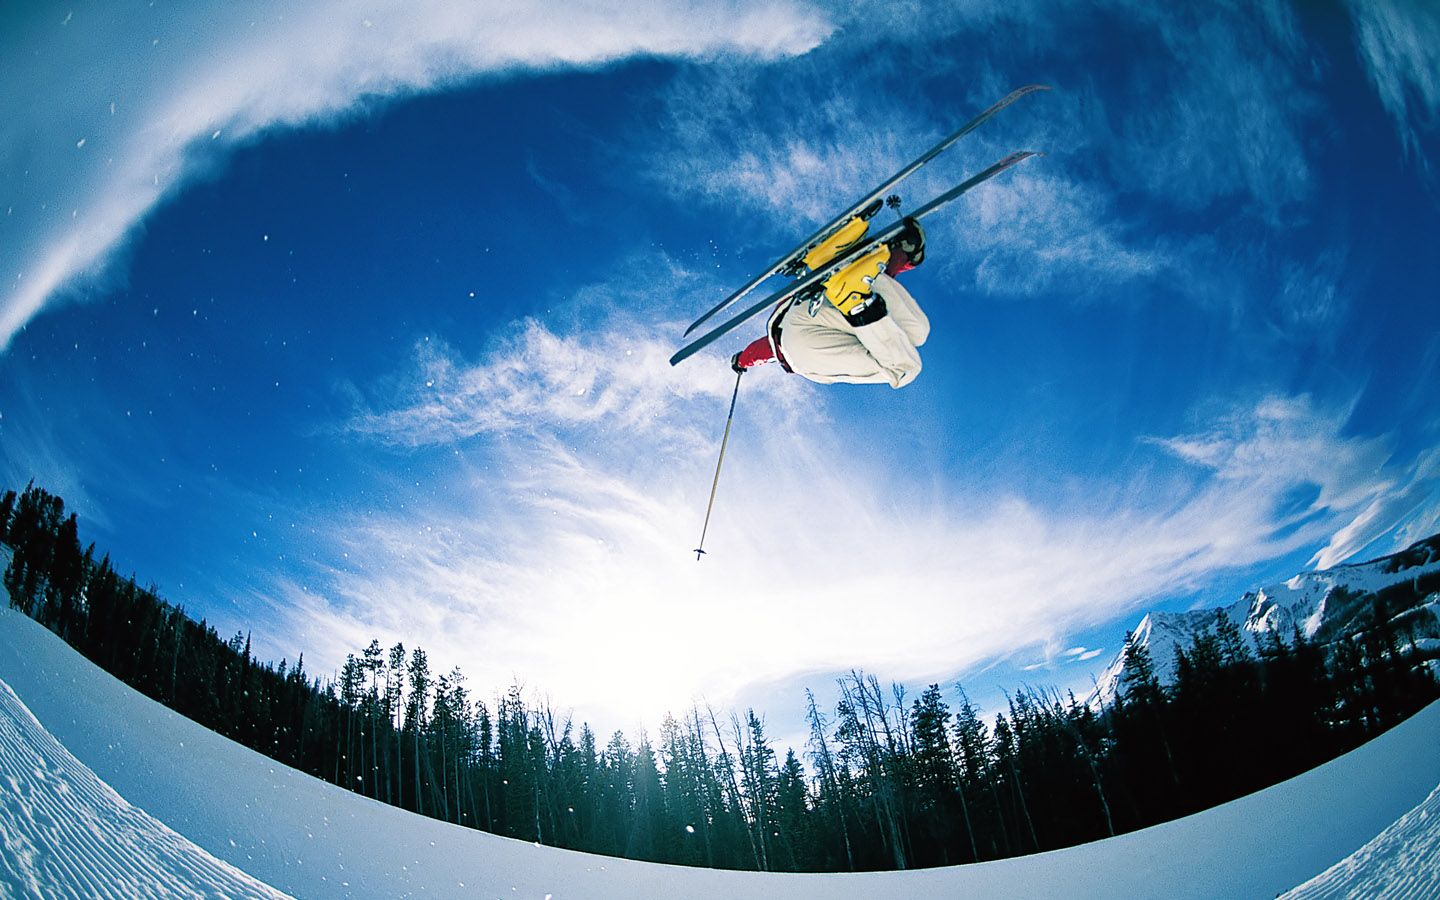 Skiing Hd Wallpapers | Free HD Desktop Wallpapers - Widescreen Images